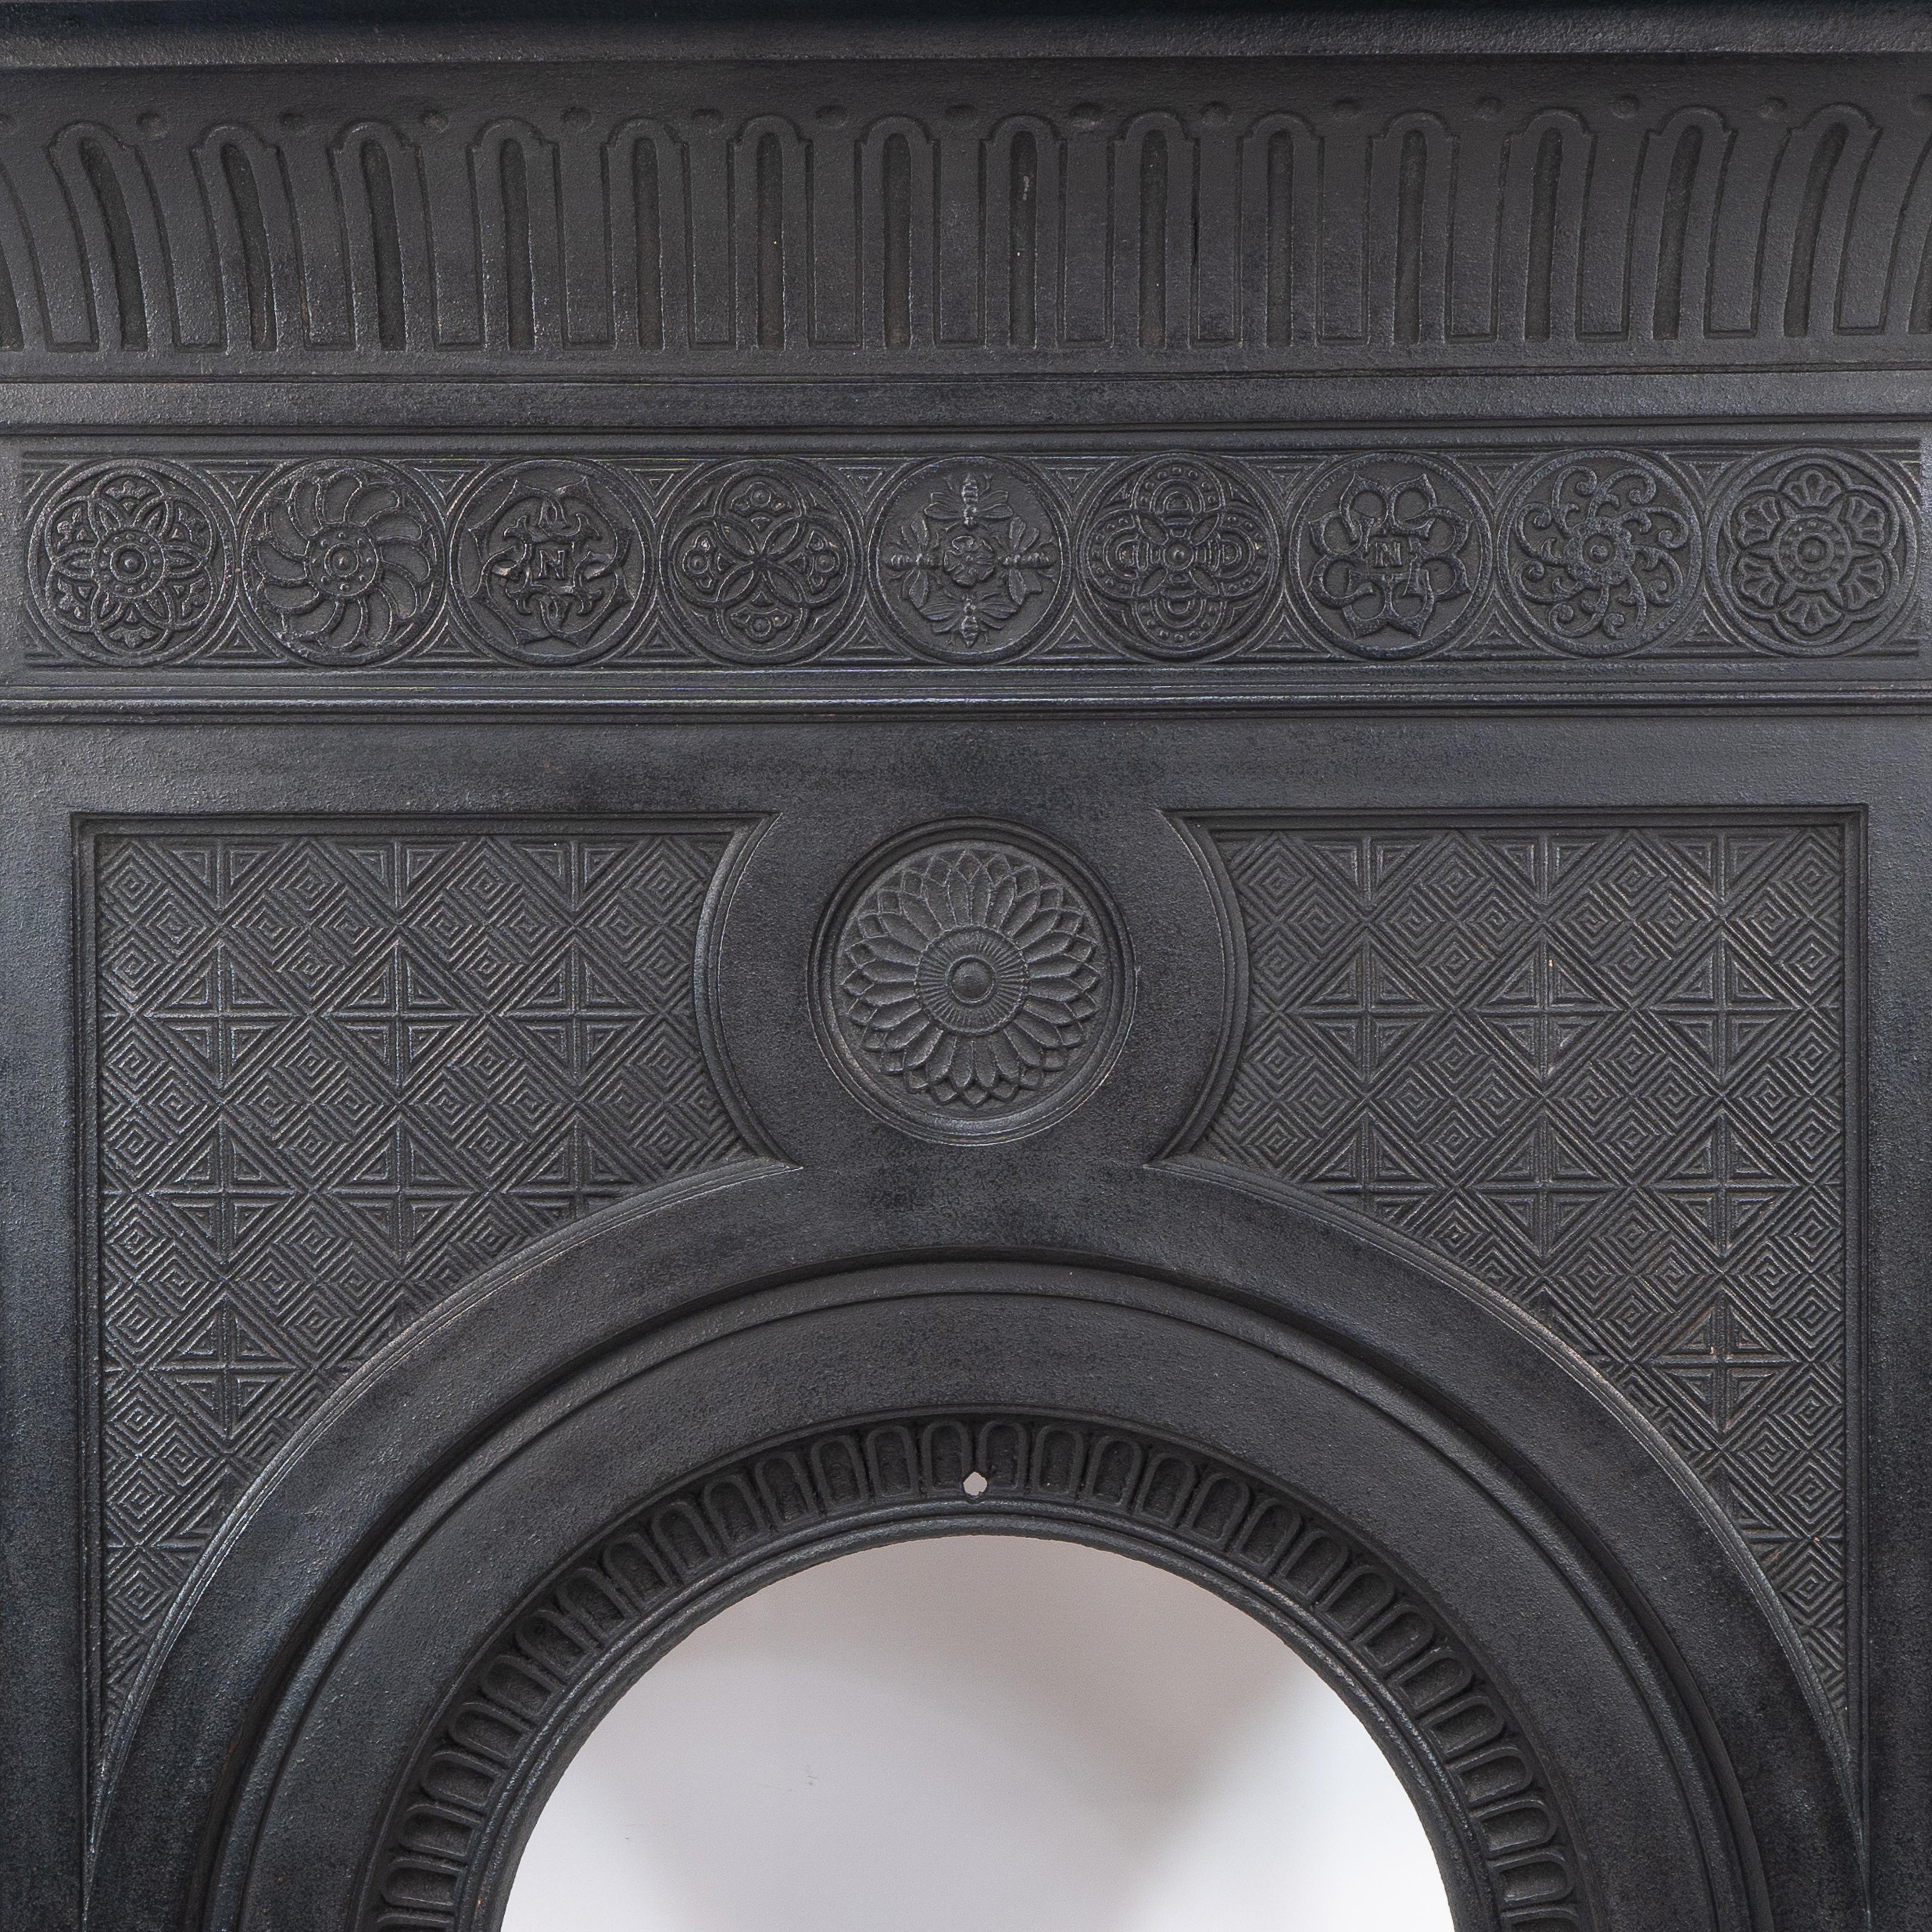 Berlin Iron Thomas Jeckyll for Barnard Bishop & Barnard. A rare Aesthetic Movement fireplace For Sale